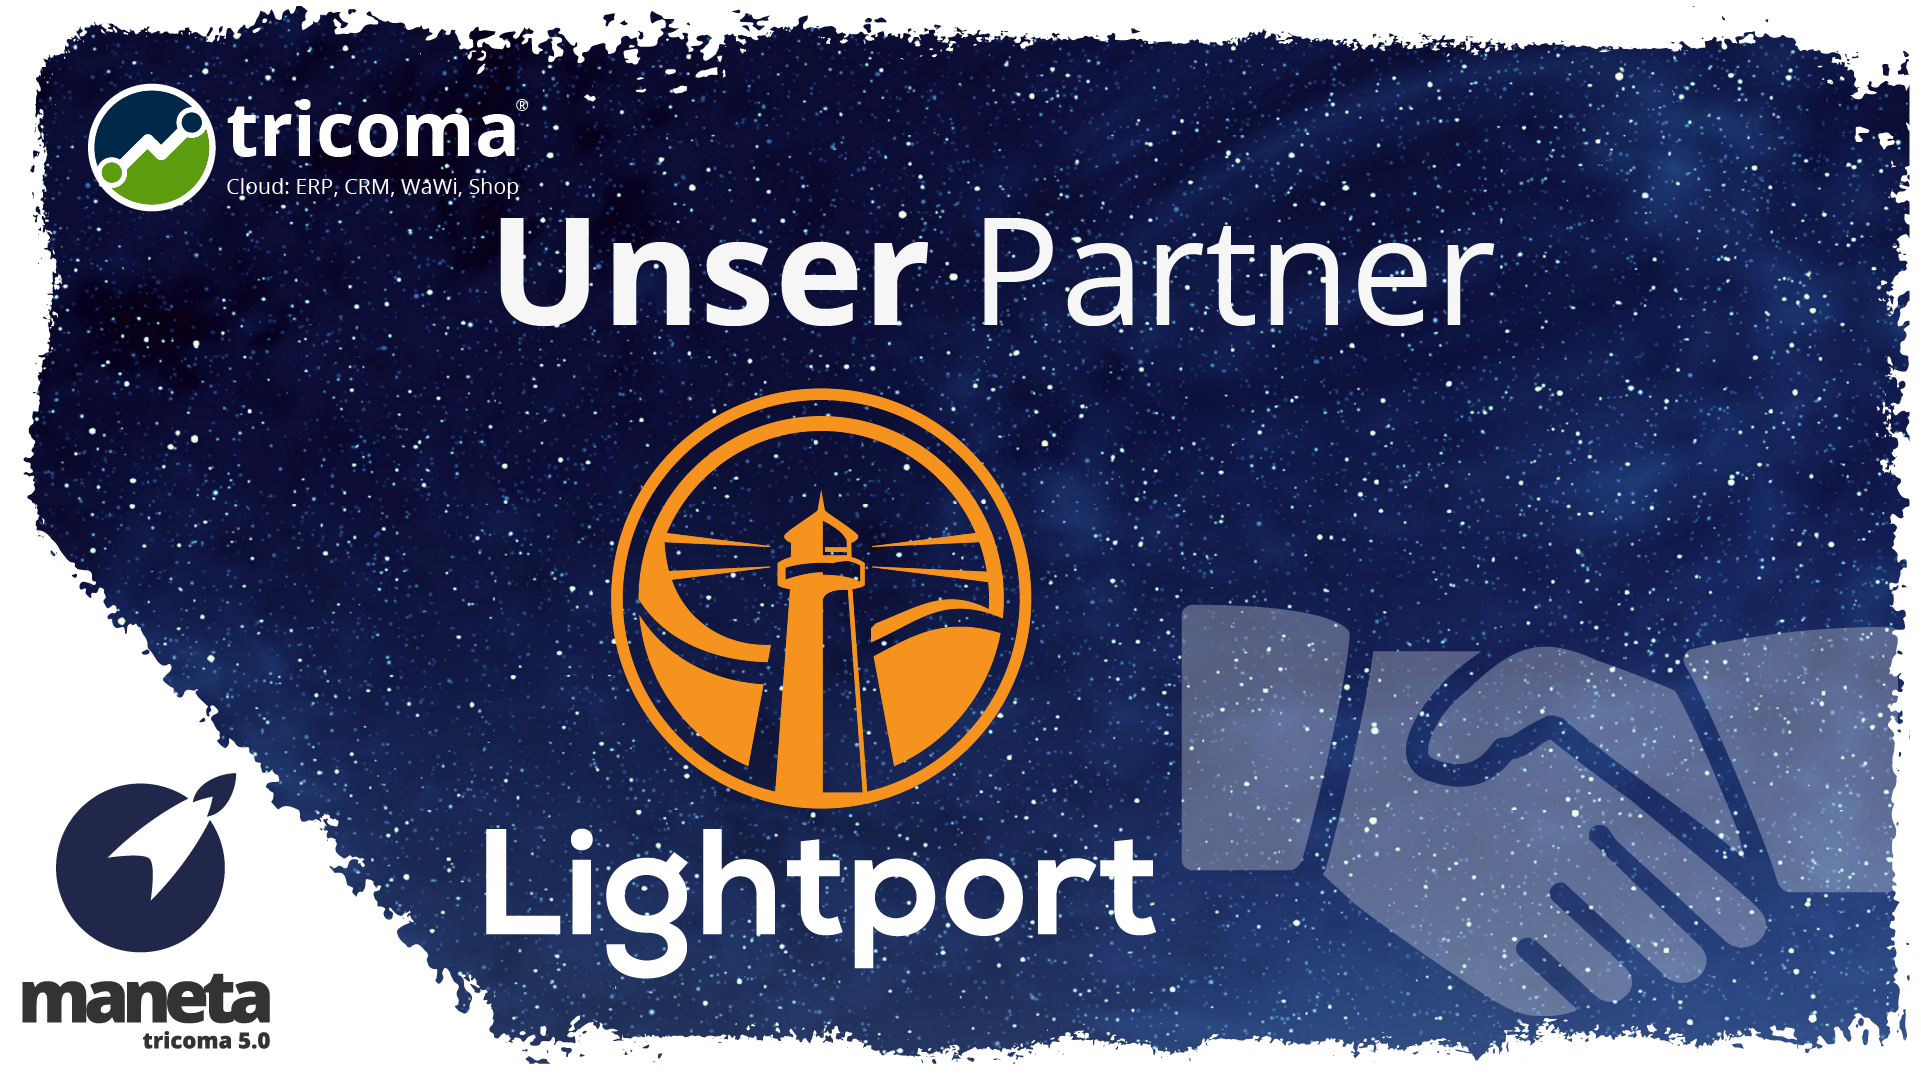 Partnervorstellung: Lightport